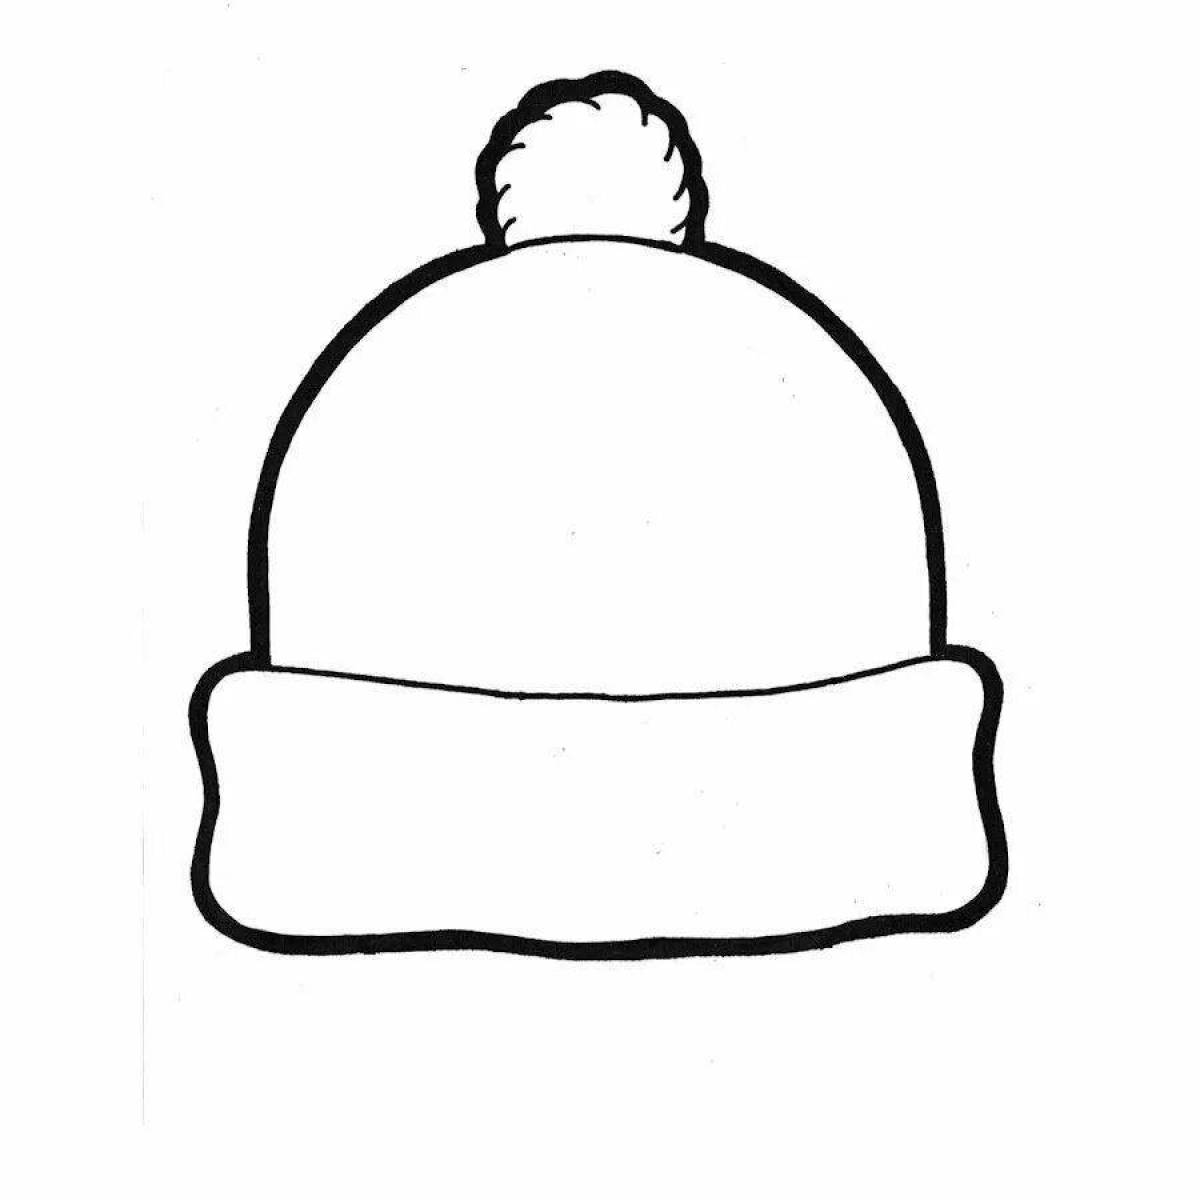 Fun skullcap design for kids